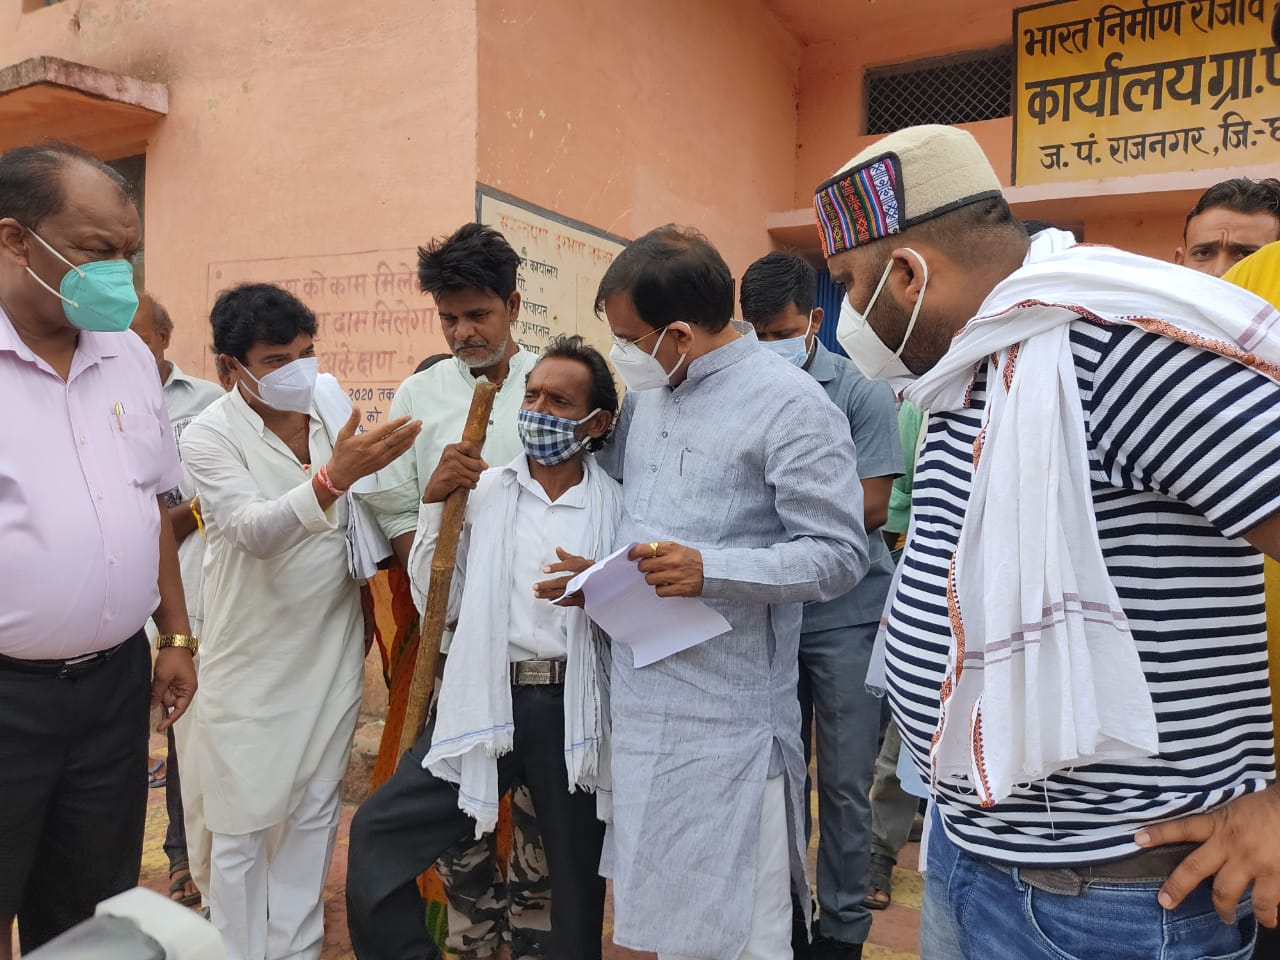 VD Sharma reached Chhatarpur in Vaccination Maha Abhiyan-2